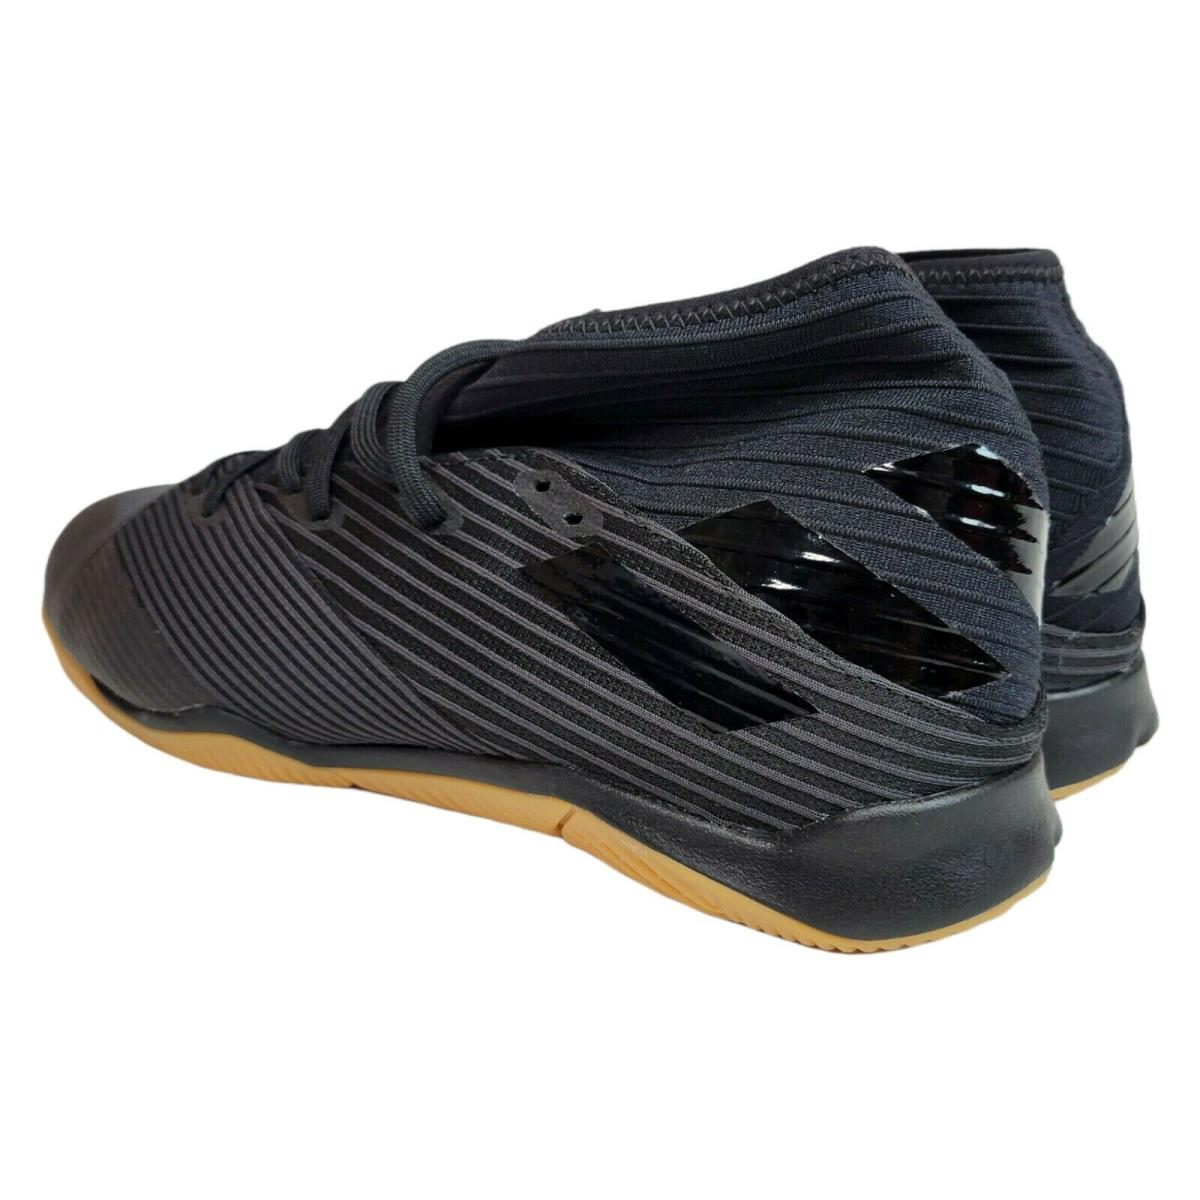 Adidas shoes Nemeziz - Black 3